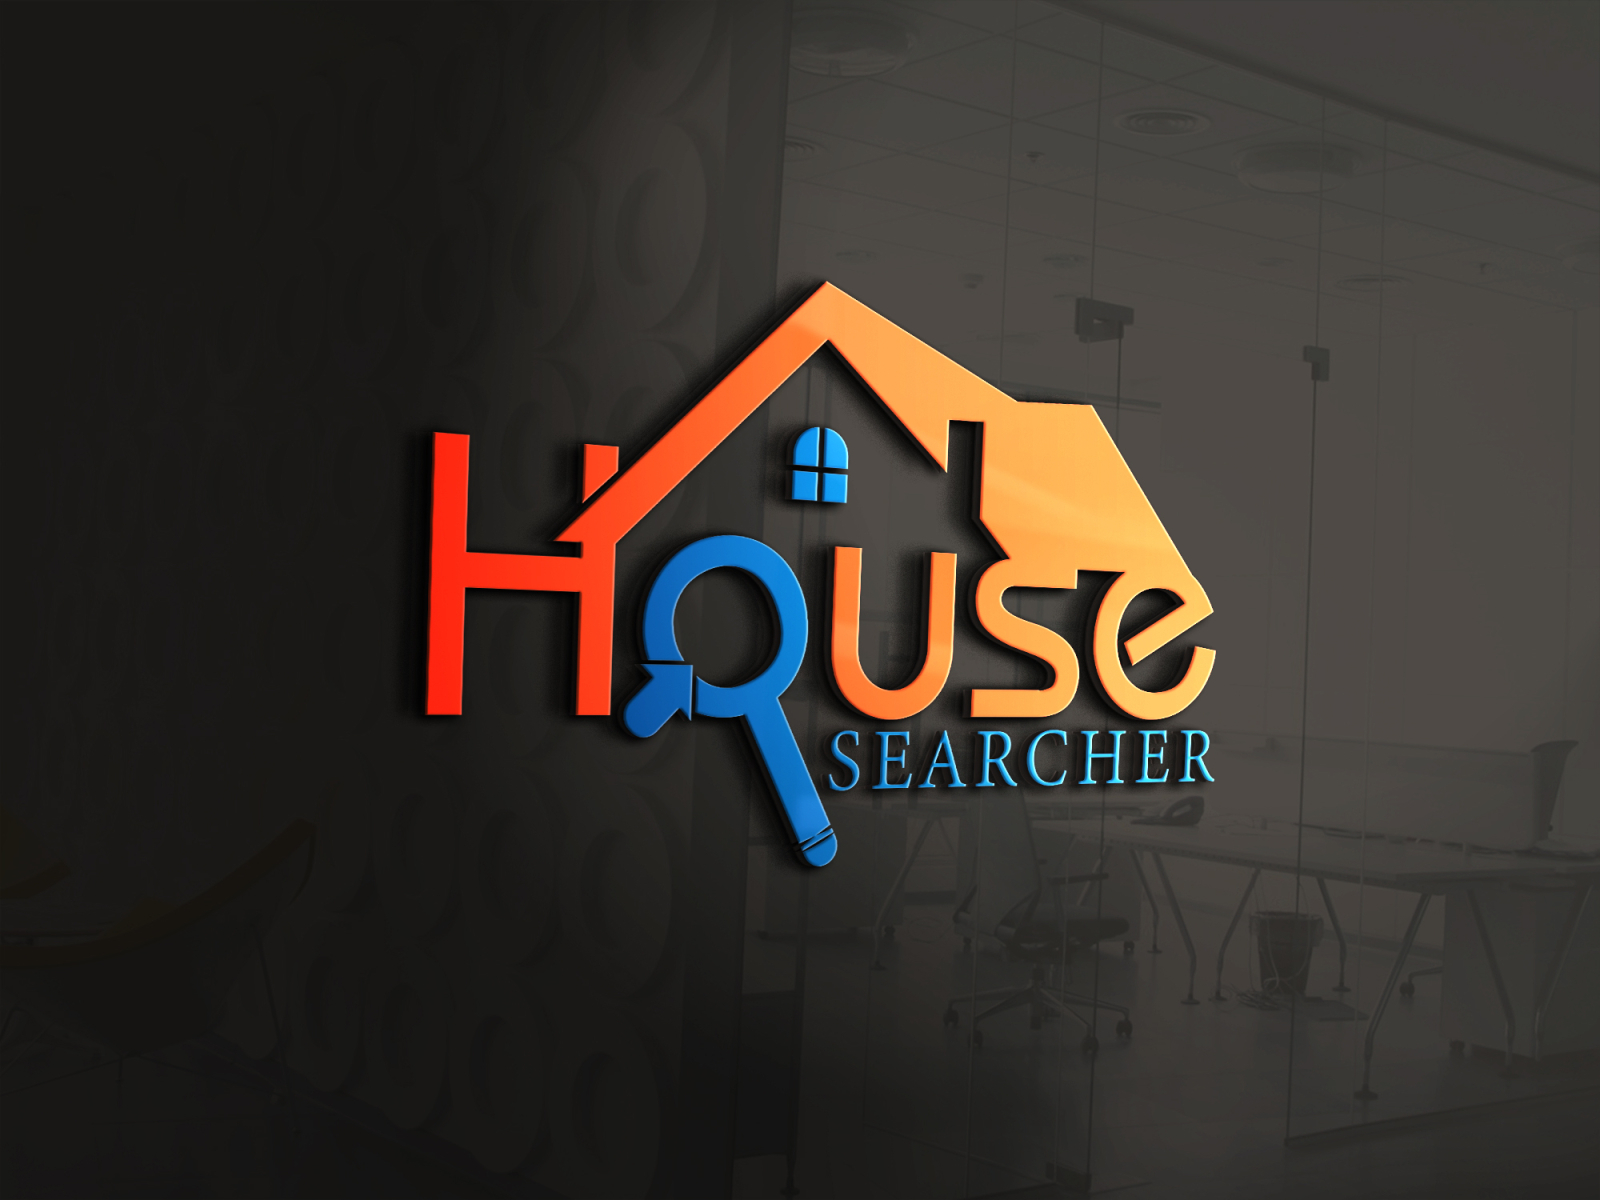 House Searcher (logo design) by Chirag Thakur on Dribbble